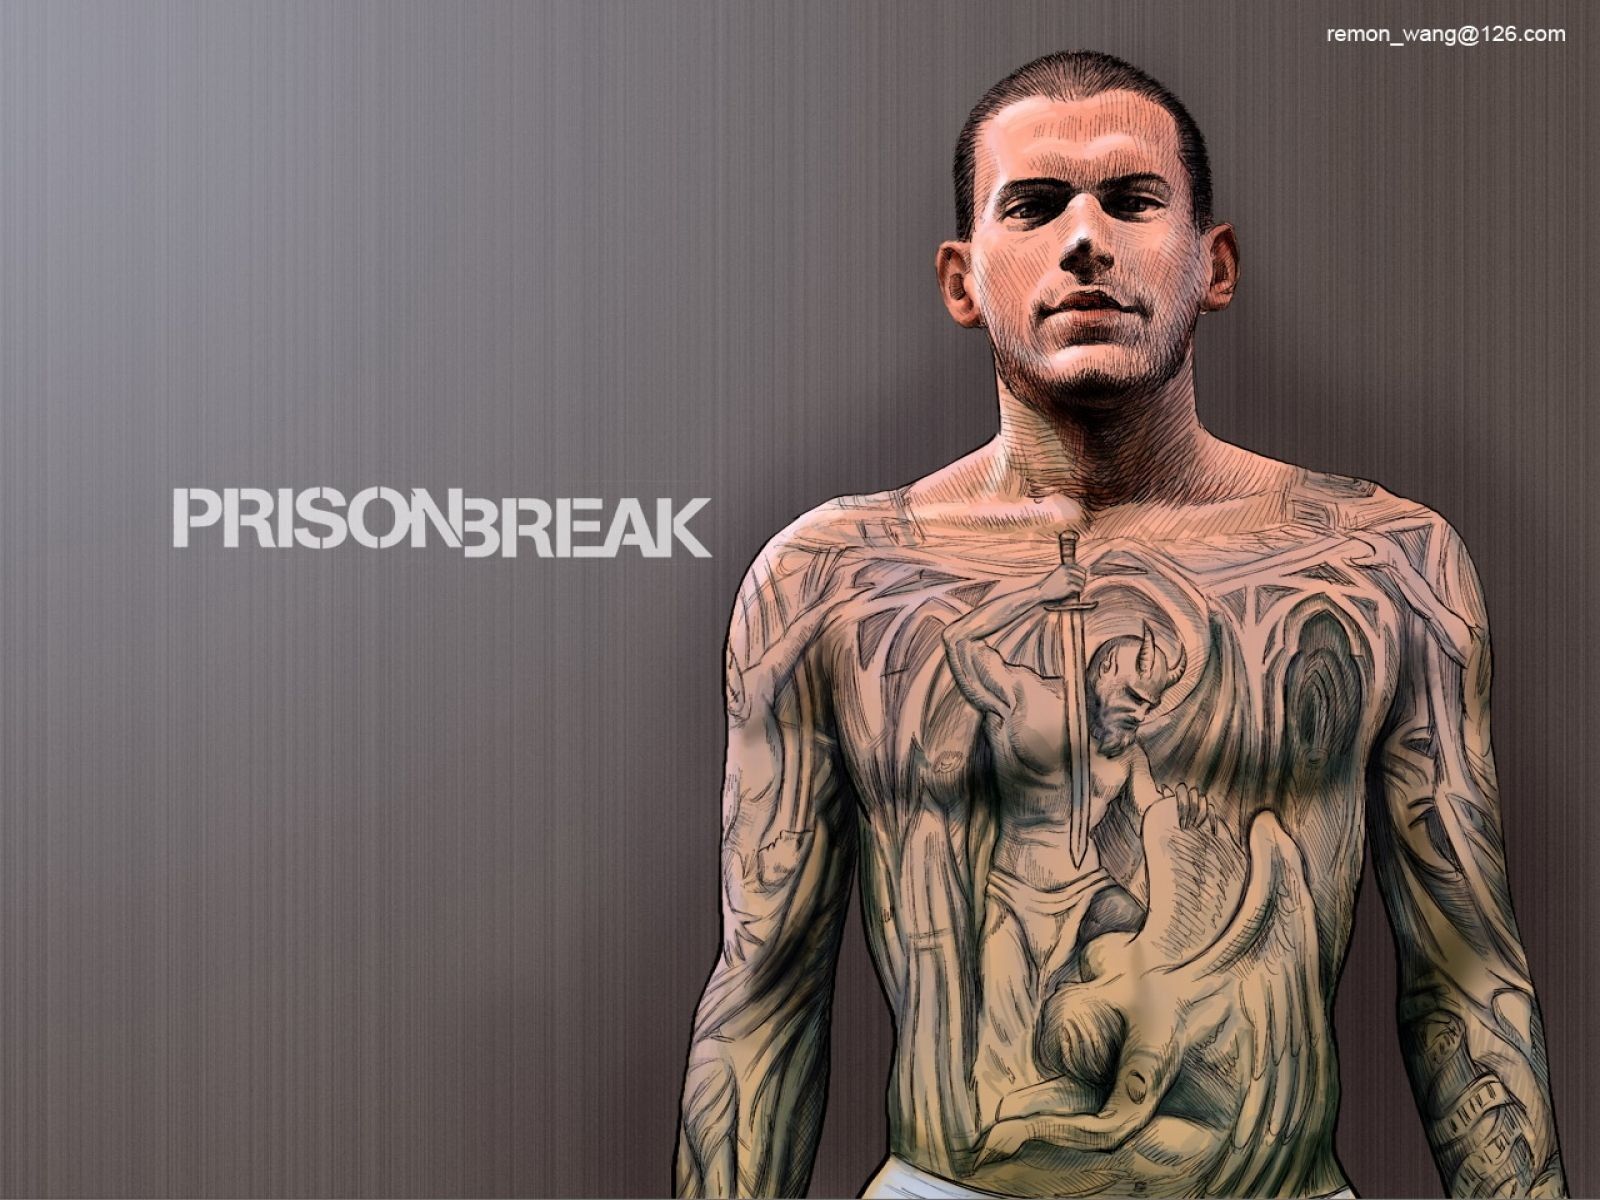 Elegant Prison Break Michael Scofield Wallpaper di 2020